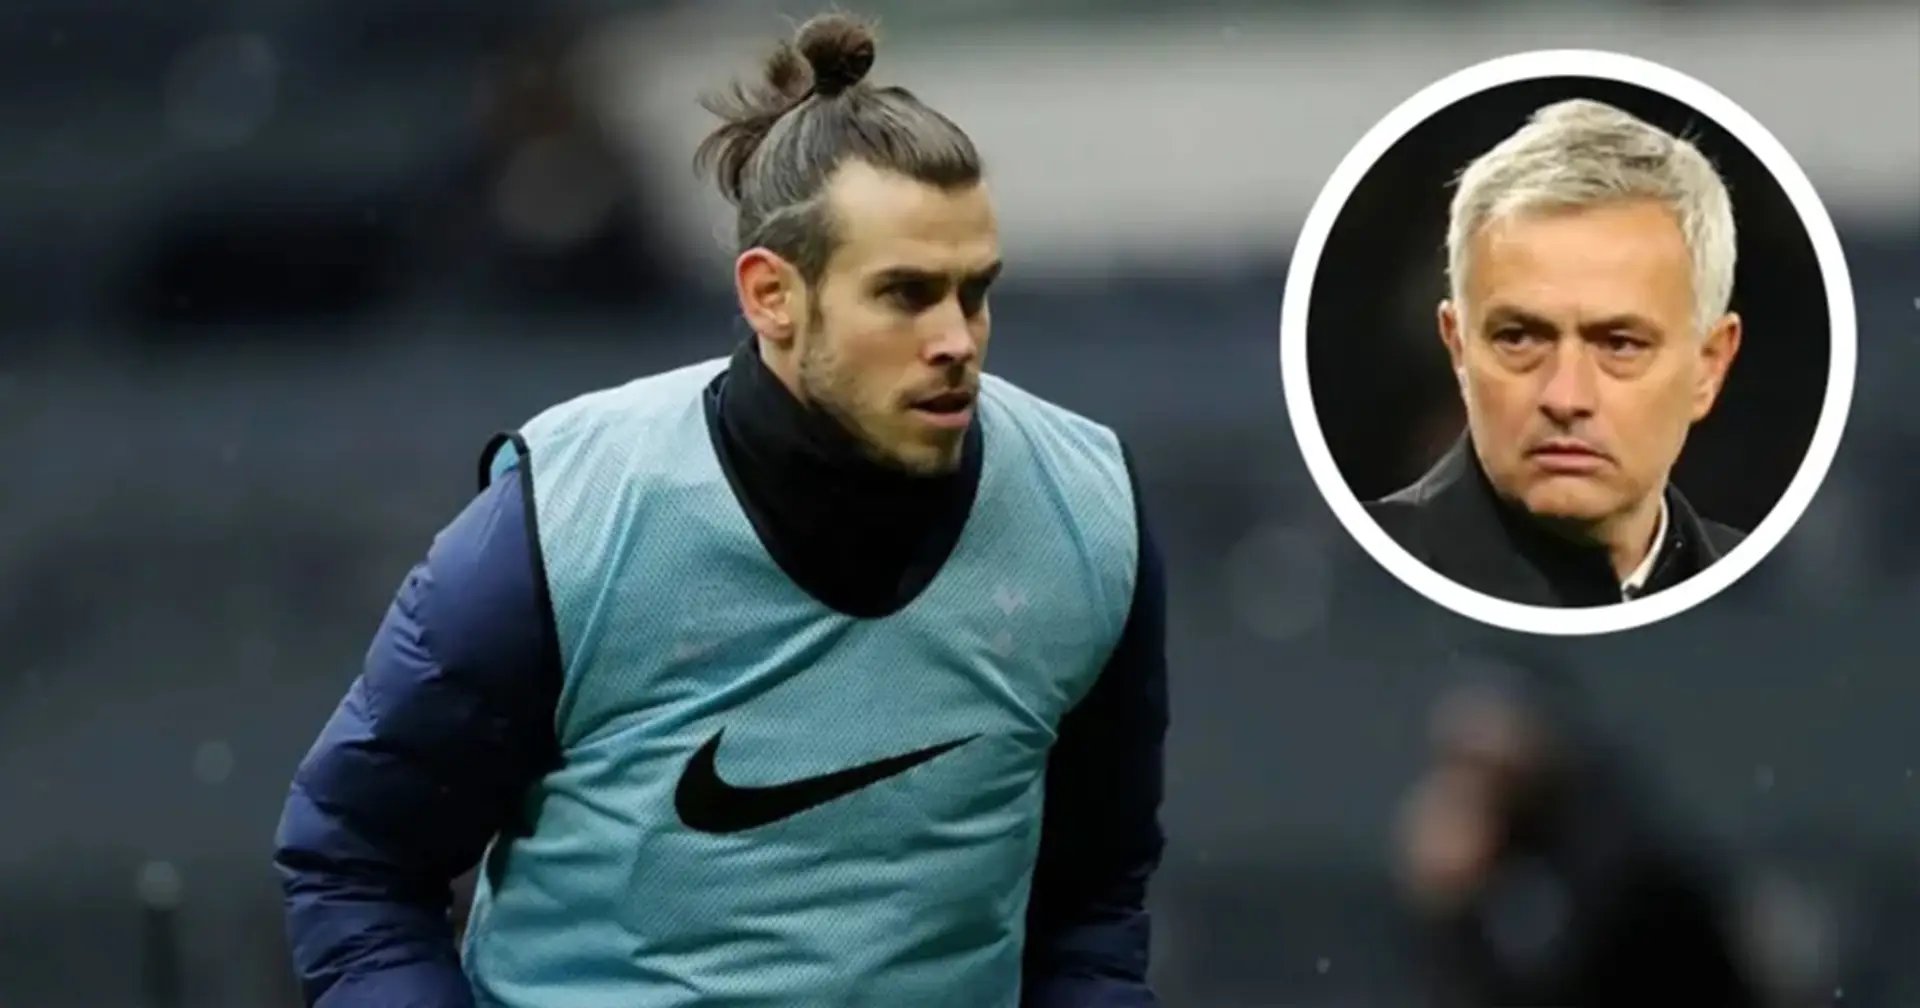 'A veces podemos tomar decisiones equivocadas': José Mourinho admite haberse equivocado con Bale